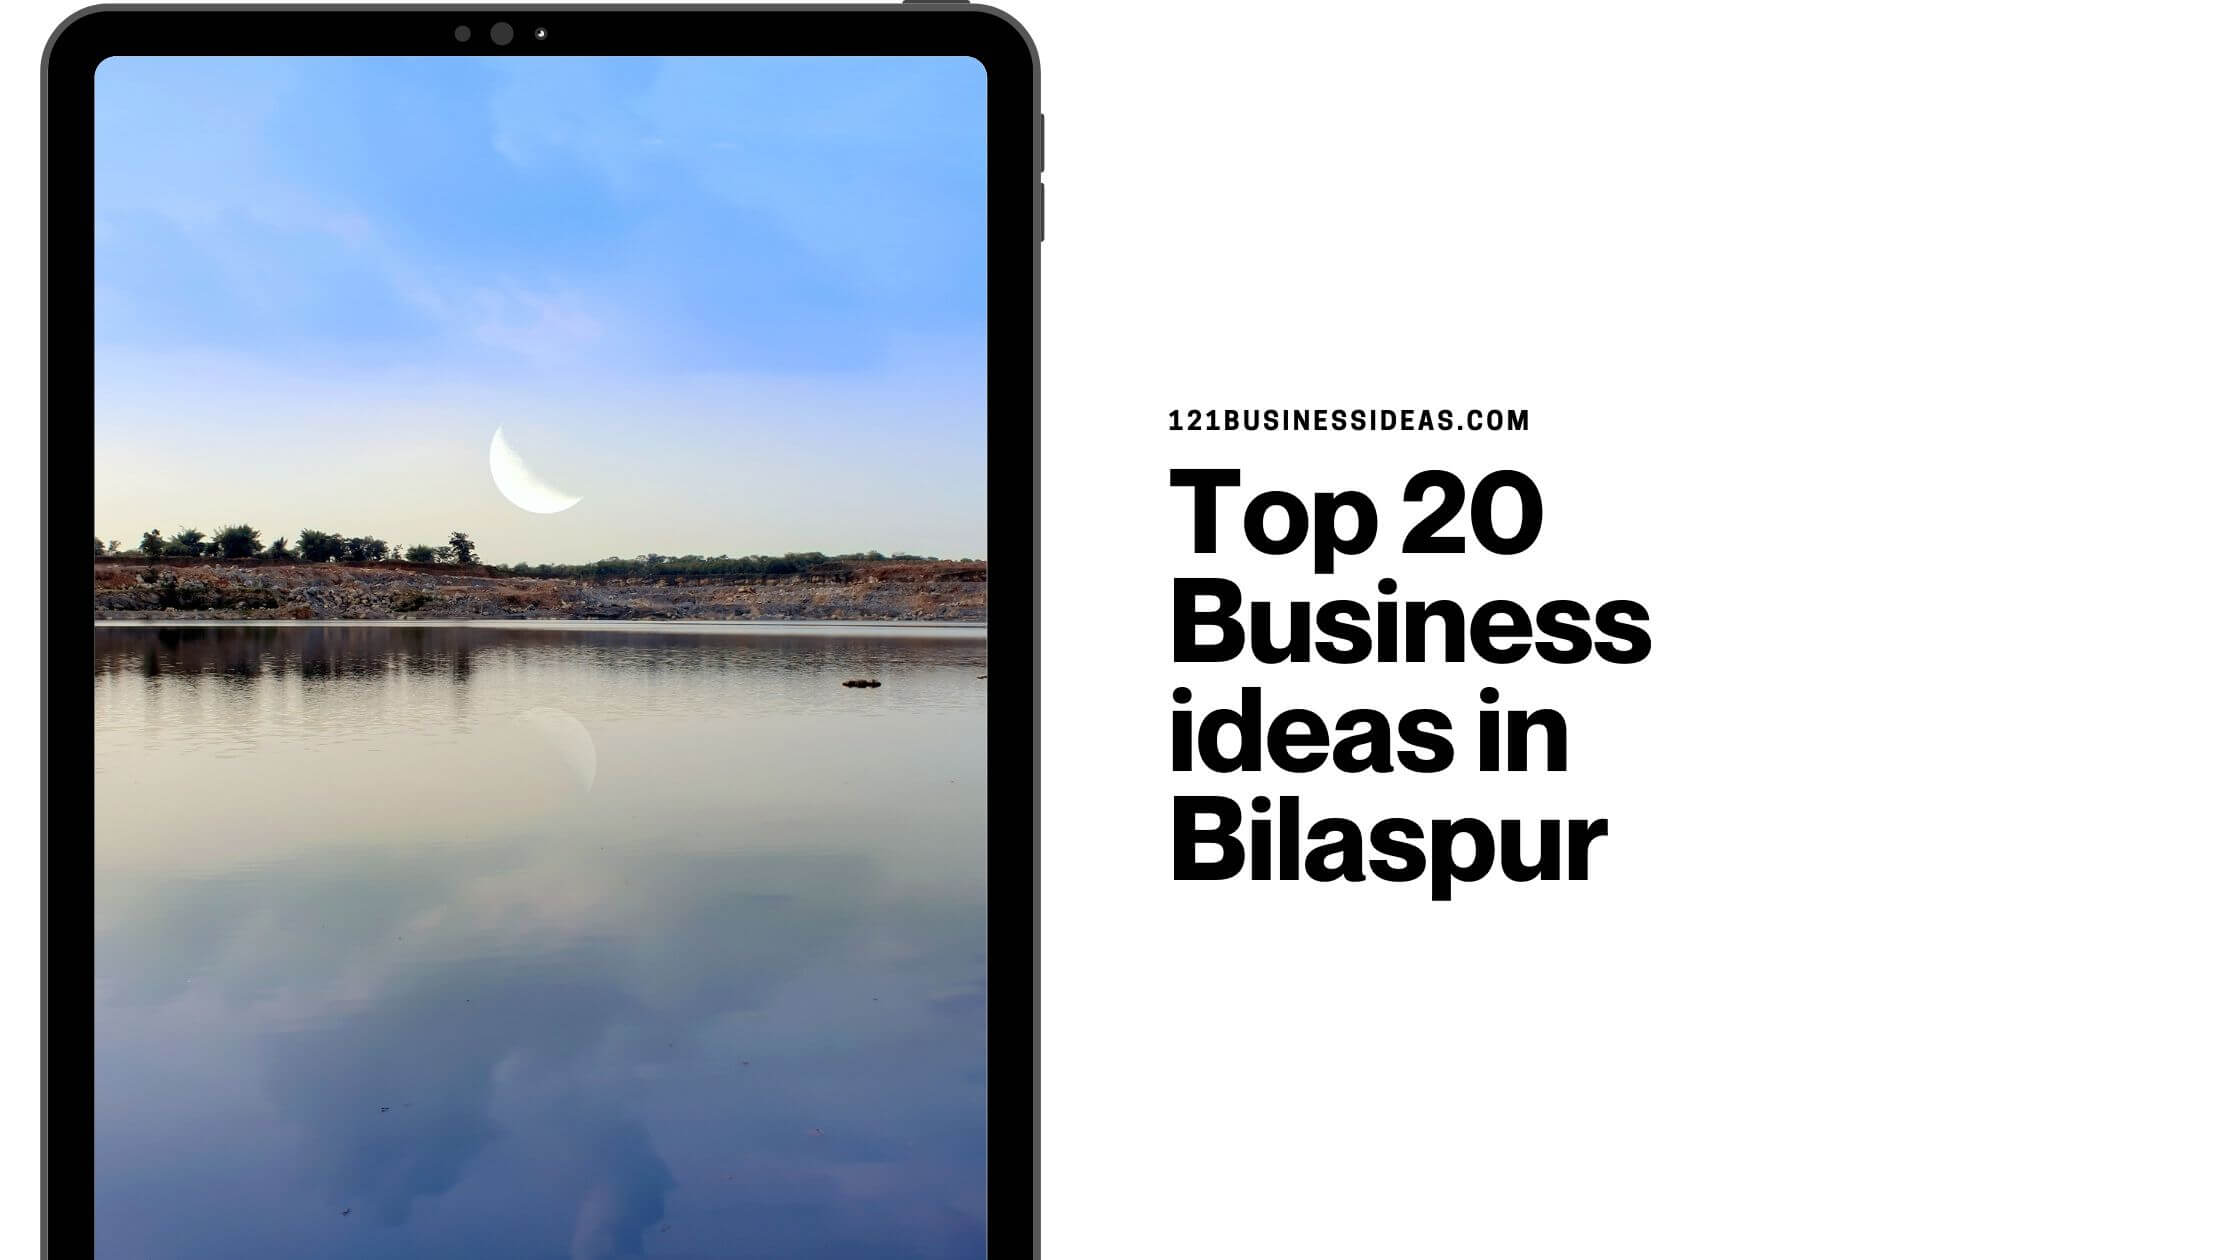 Top 20 Business ideas in Bilaspur (1)